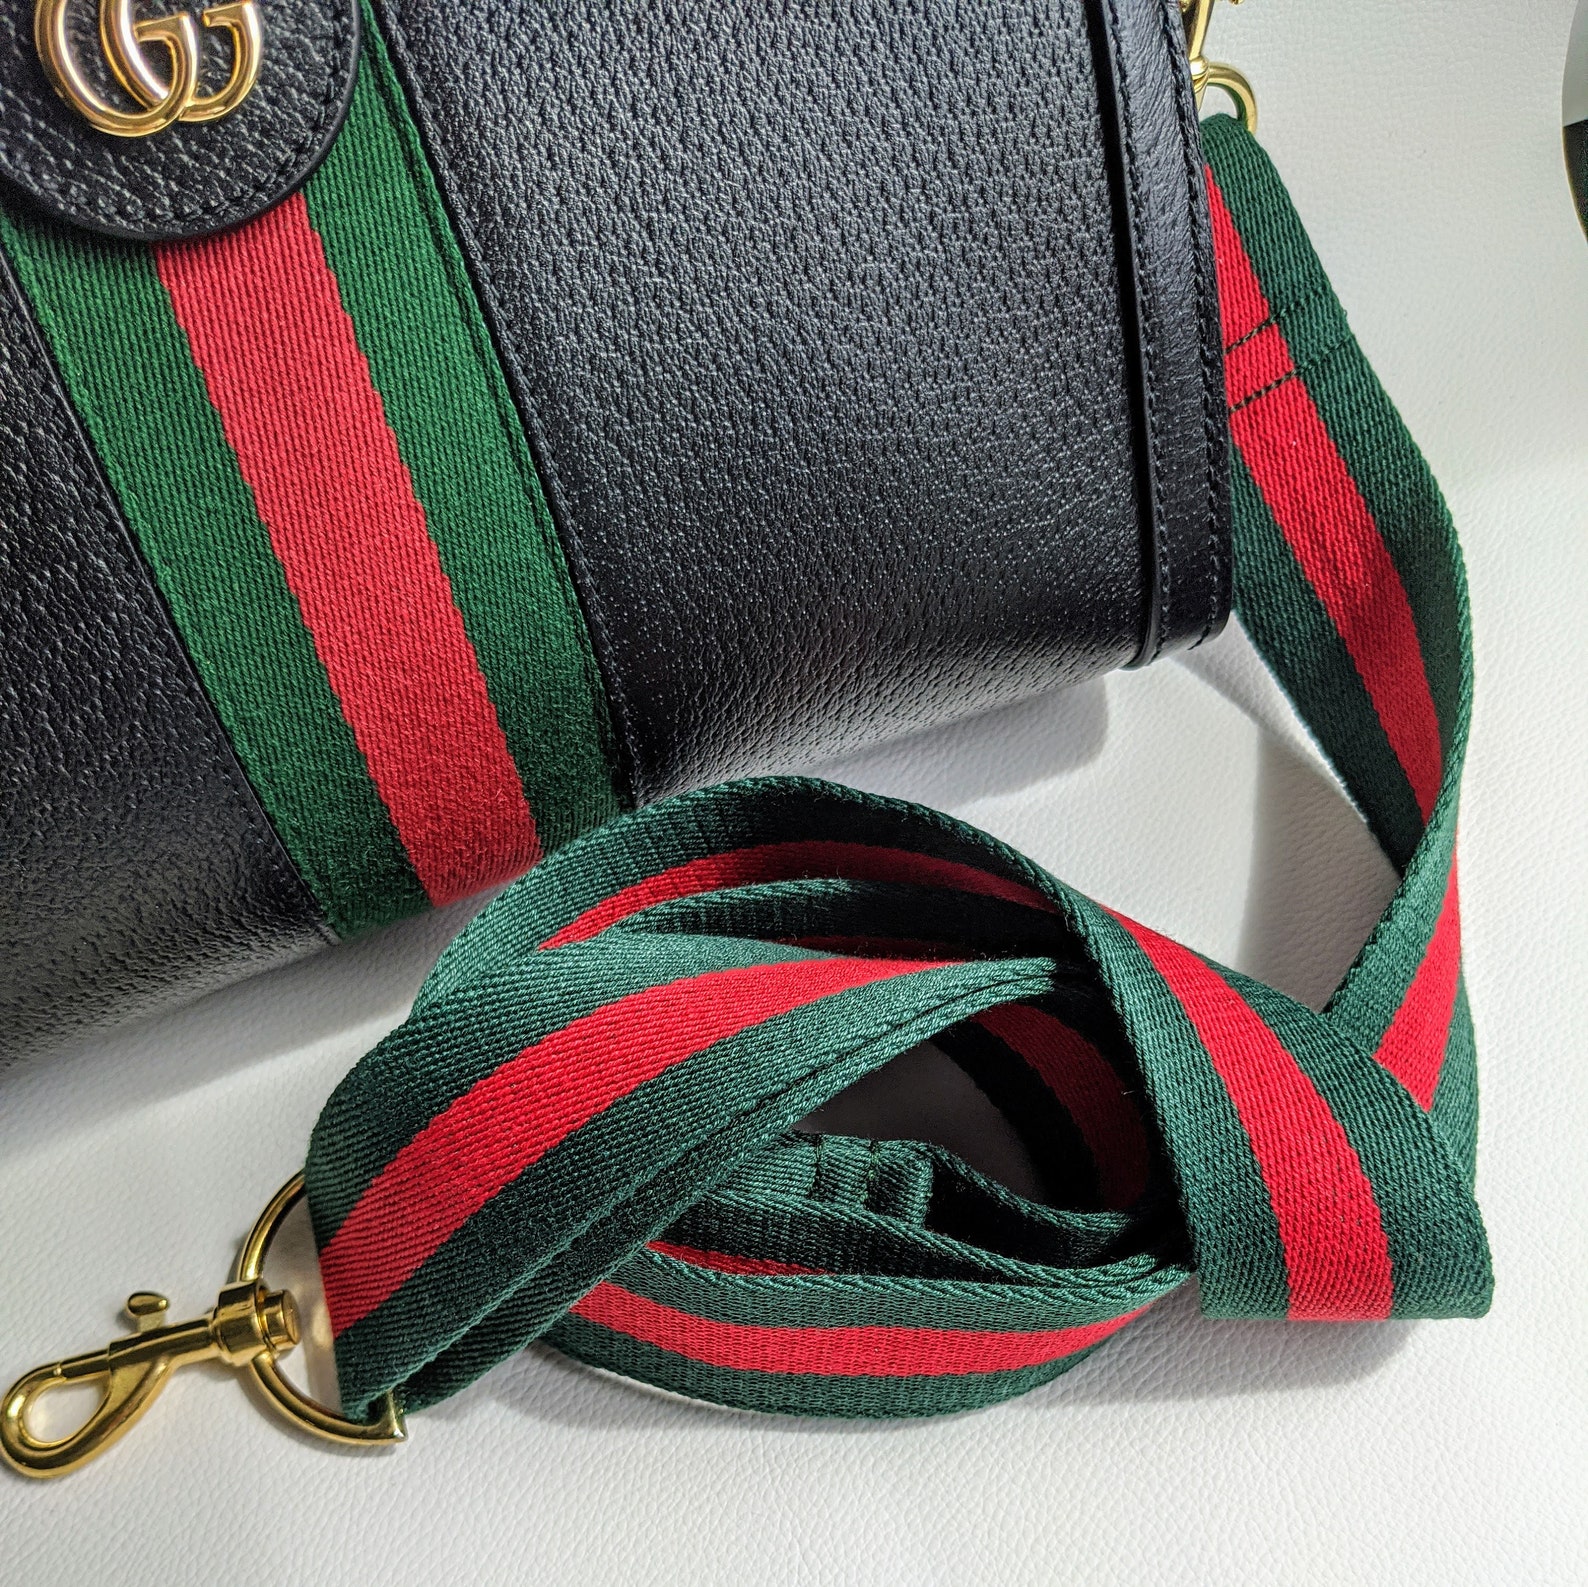 1.5 Guitar style bag purse strap Gucci Style Stripe | Etsy